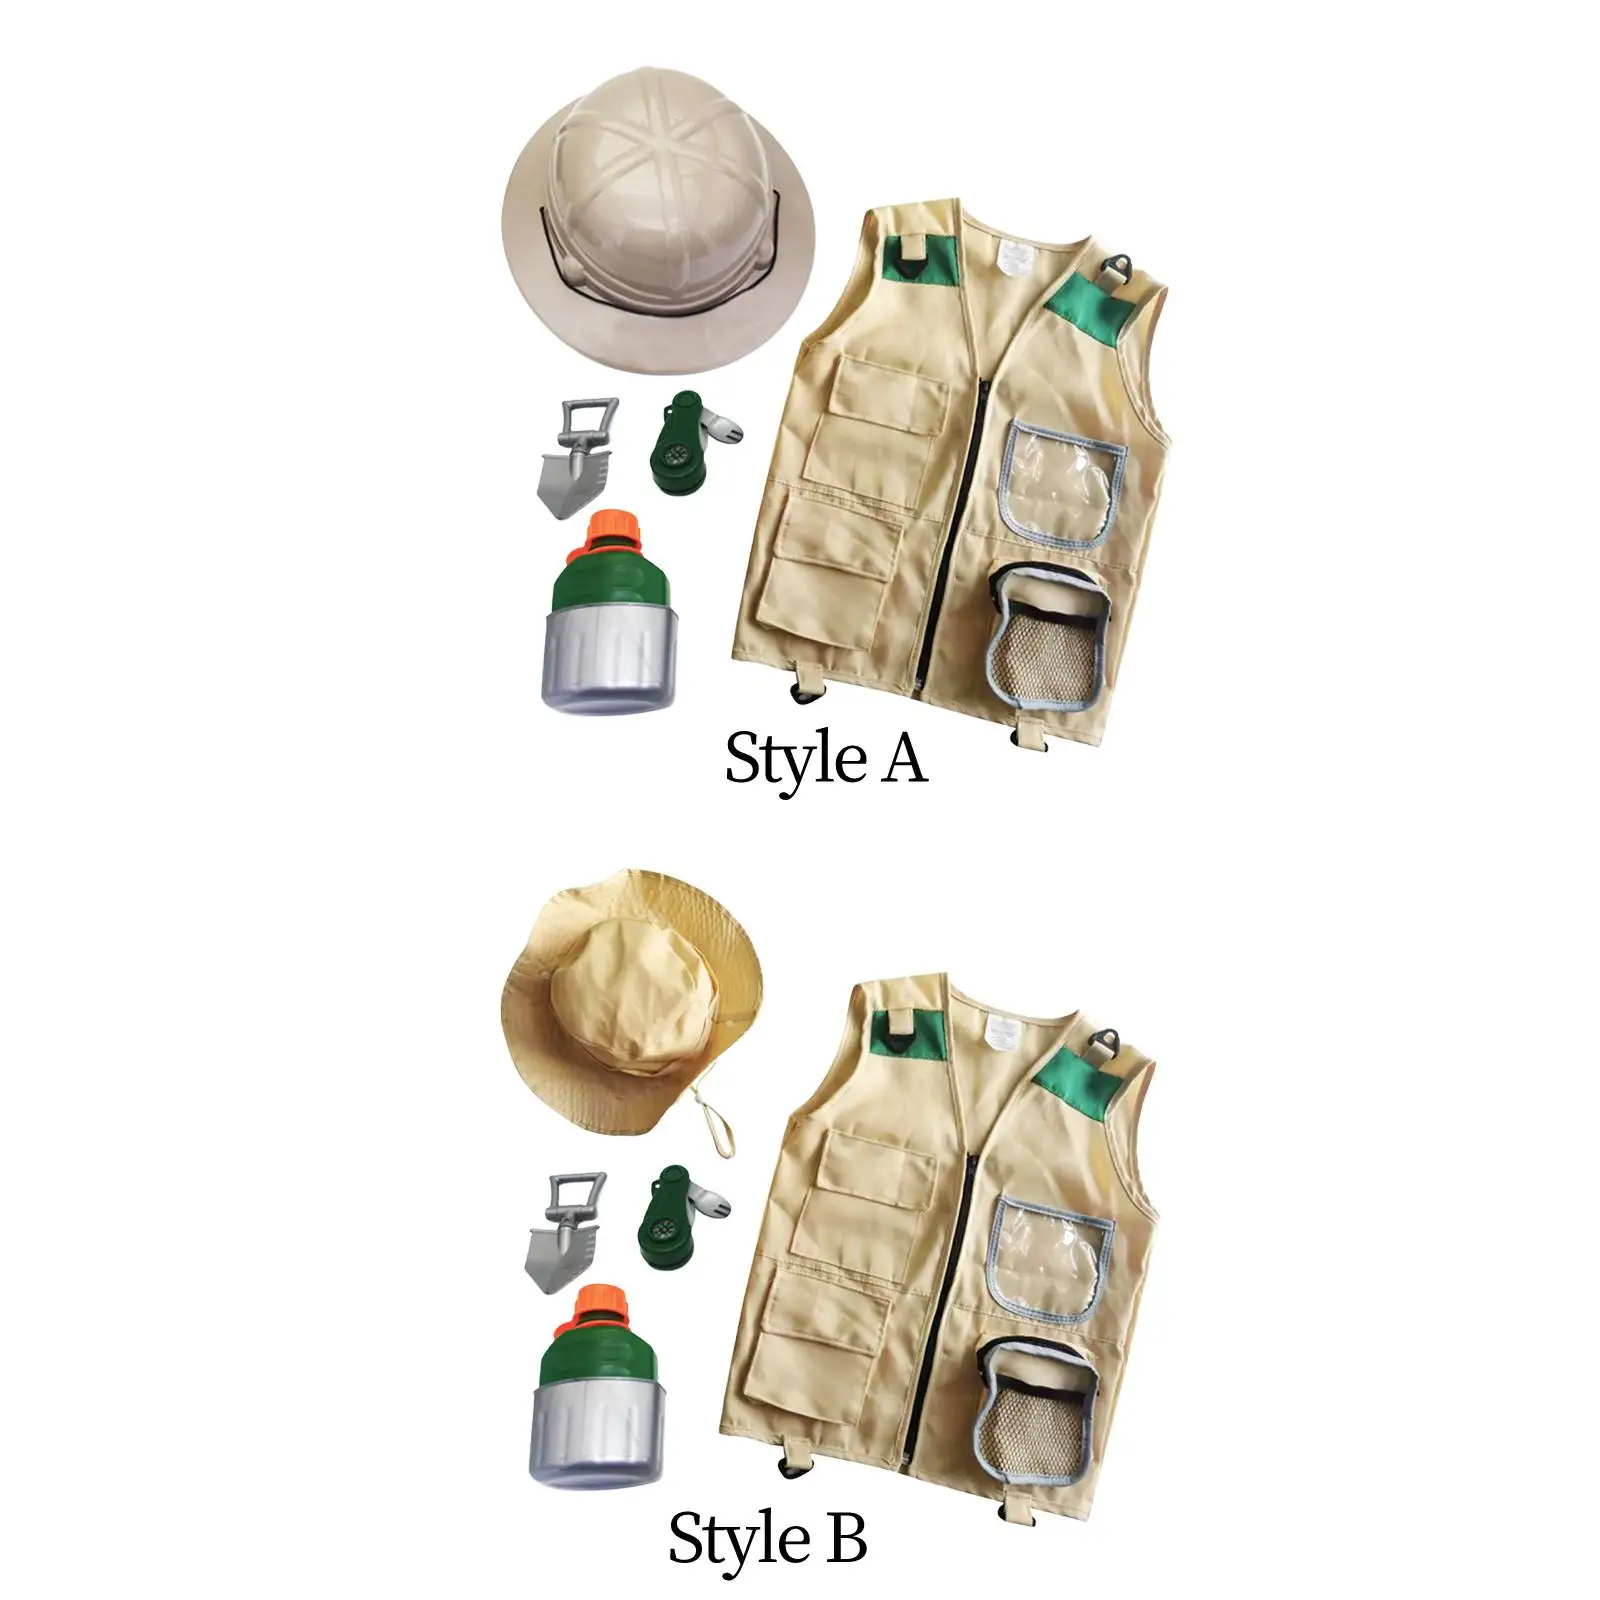 Outdoor Adventure Kits Kids Explorer Costume, Cargo Vest and Hat Compass Bottle, Children Toys Explorer Kits for Paleontologist